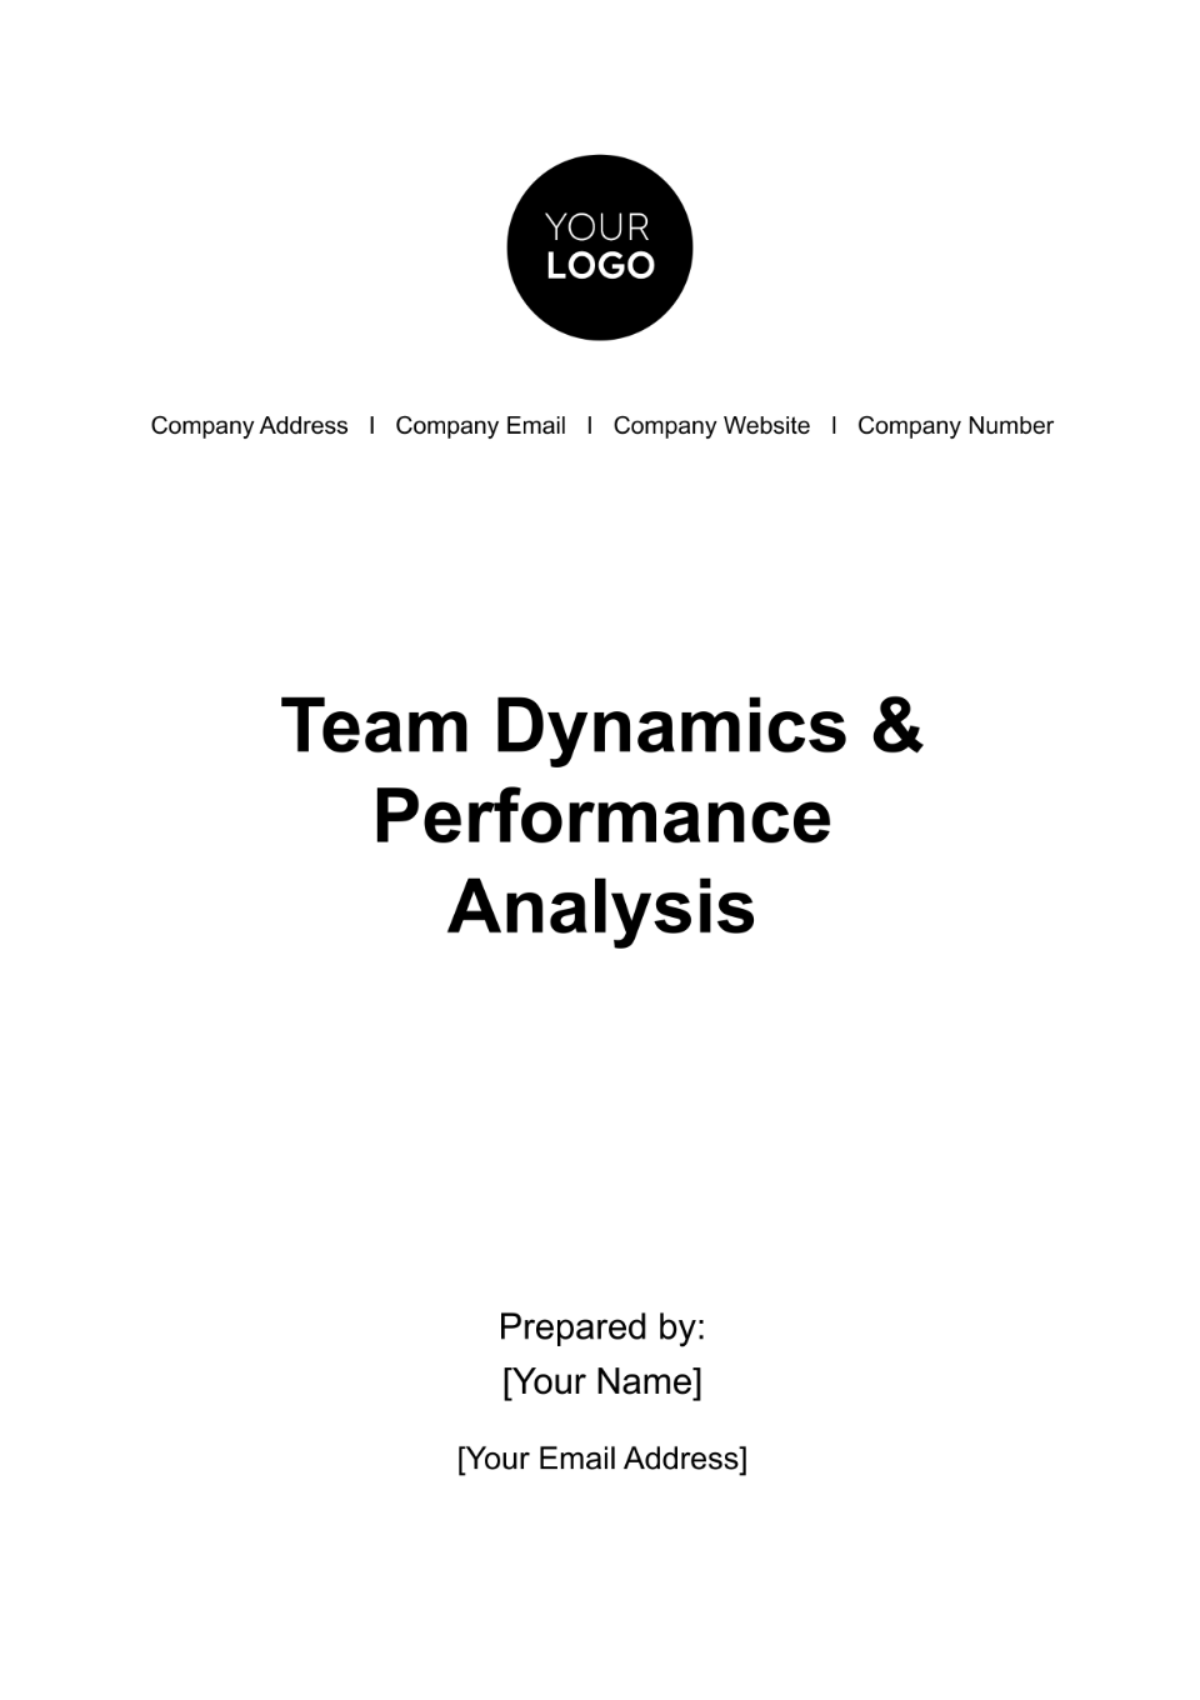 Free Team Dynamics & Performance Analysis HR Template